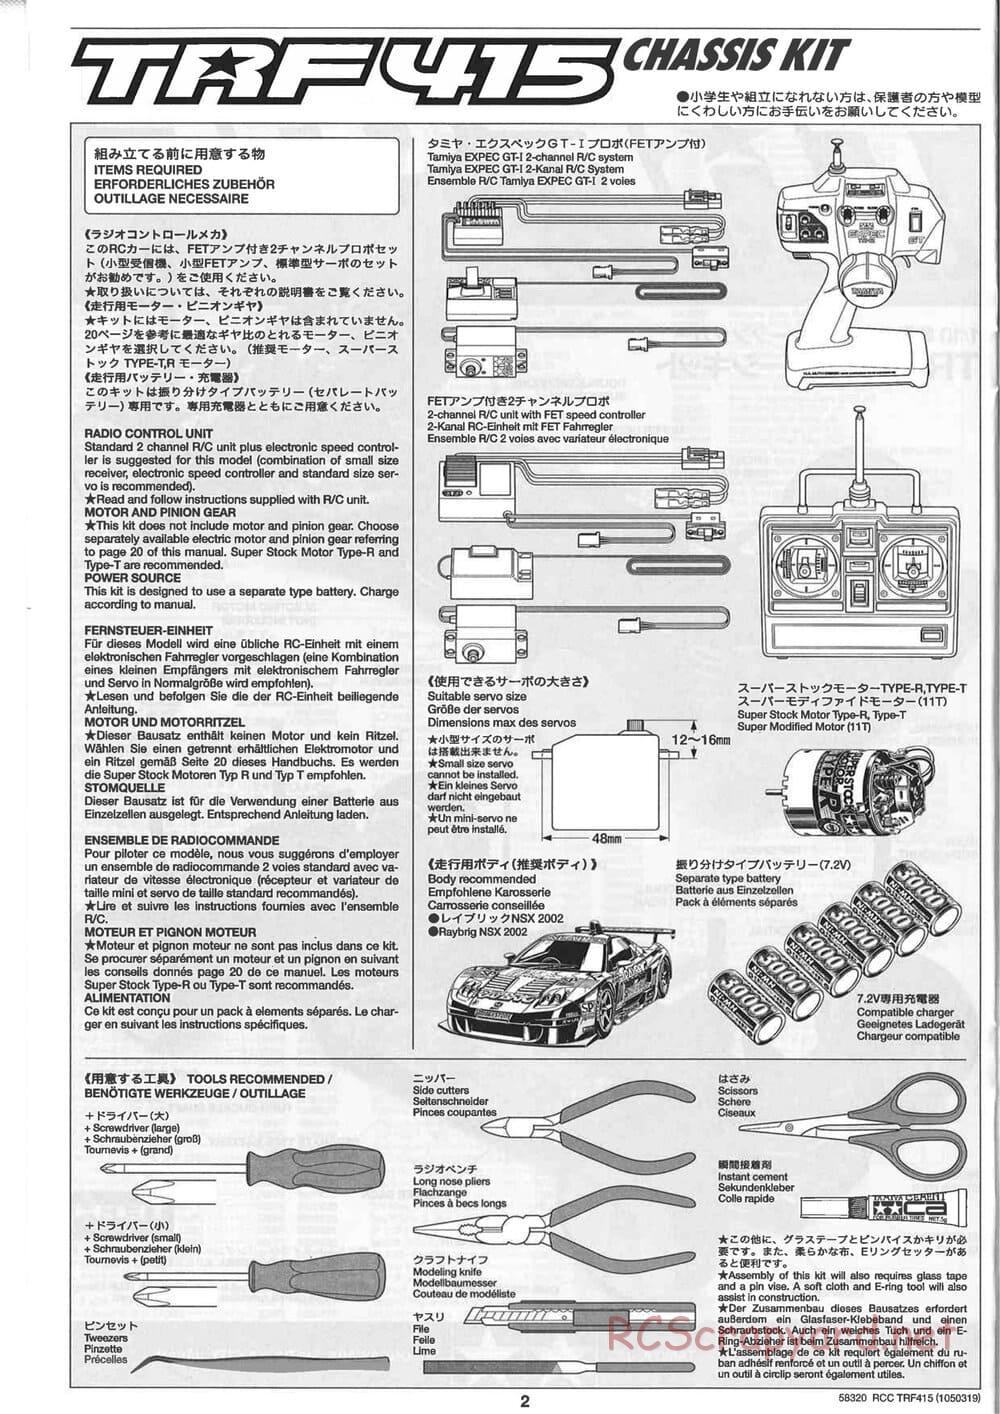 Tamiya - TRF415 Chassis - Manual - Page 2